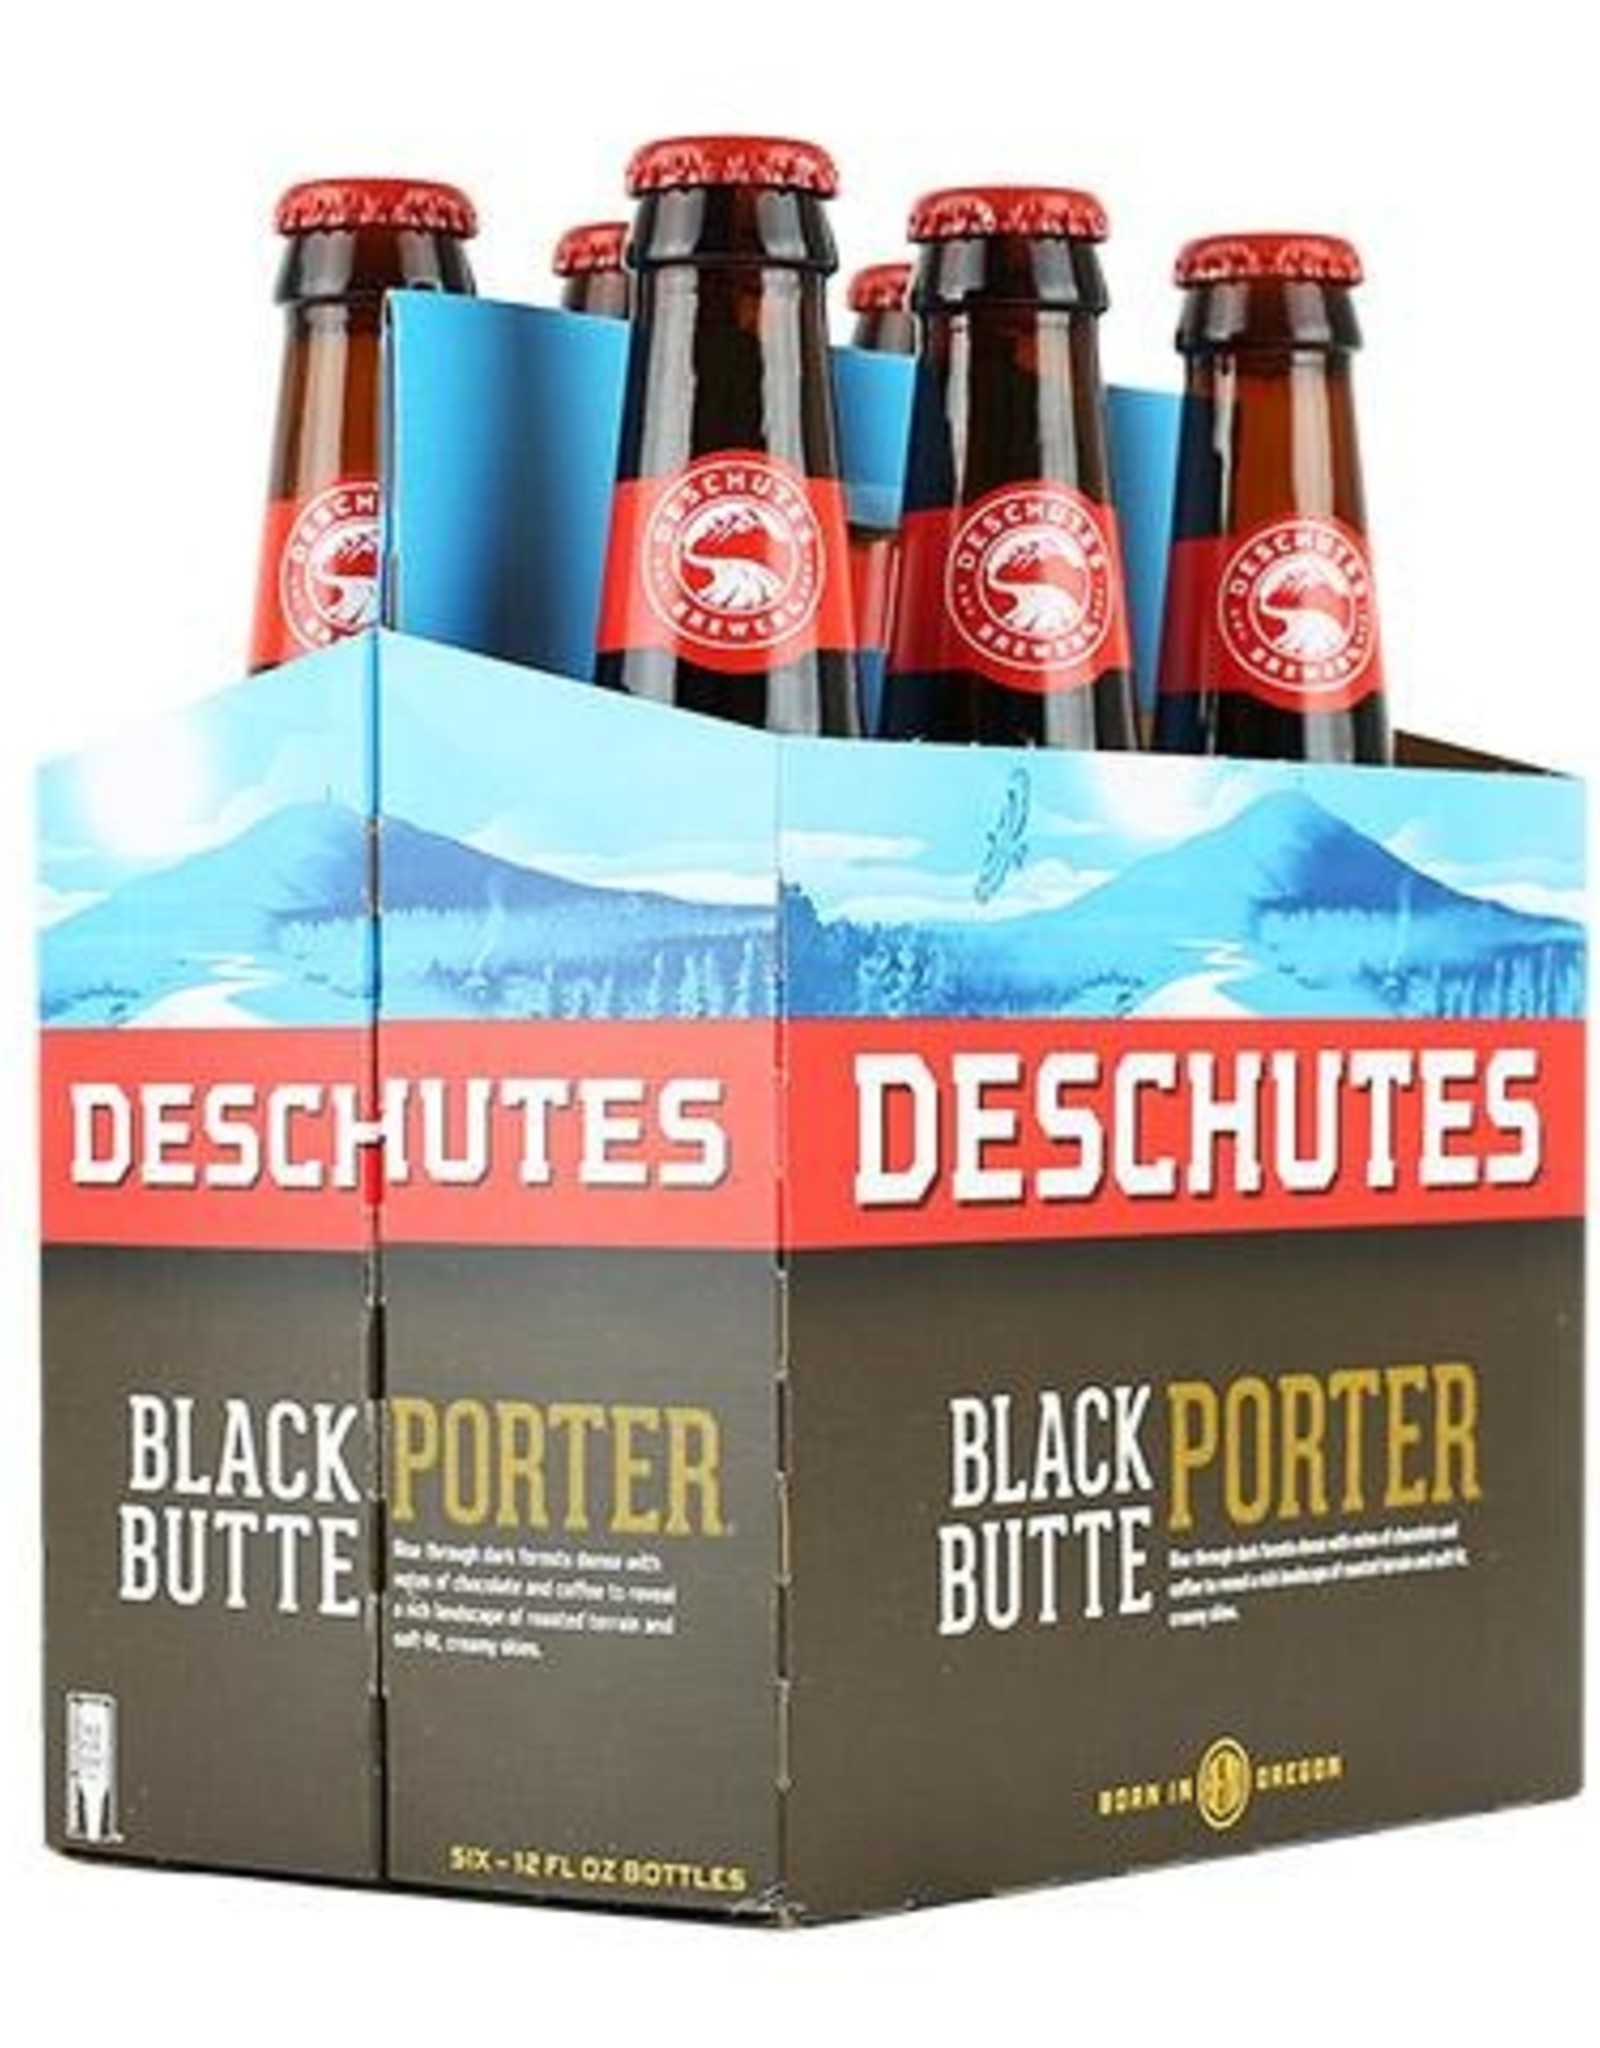 Deschutes Black Butte Porter 6x12 oz bottles